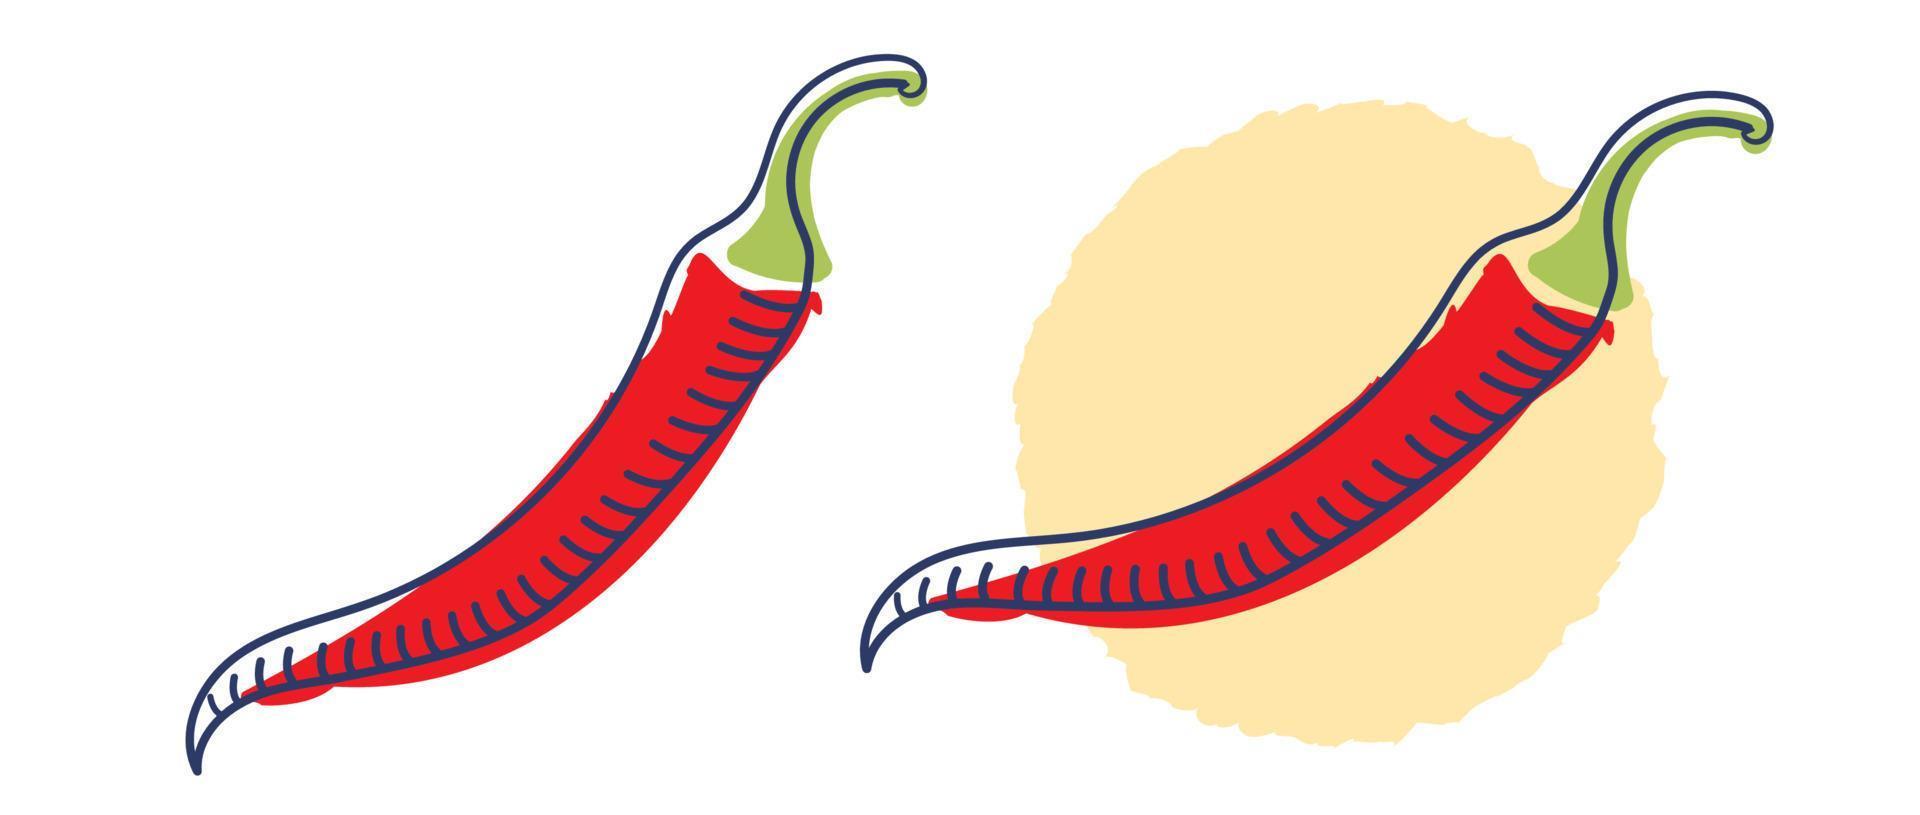 vector reeks chili paprika's in wijnoogst stijl